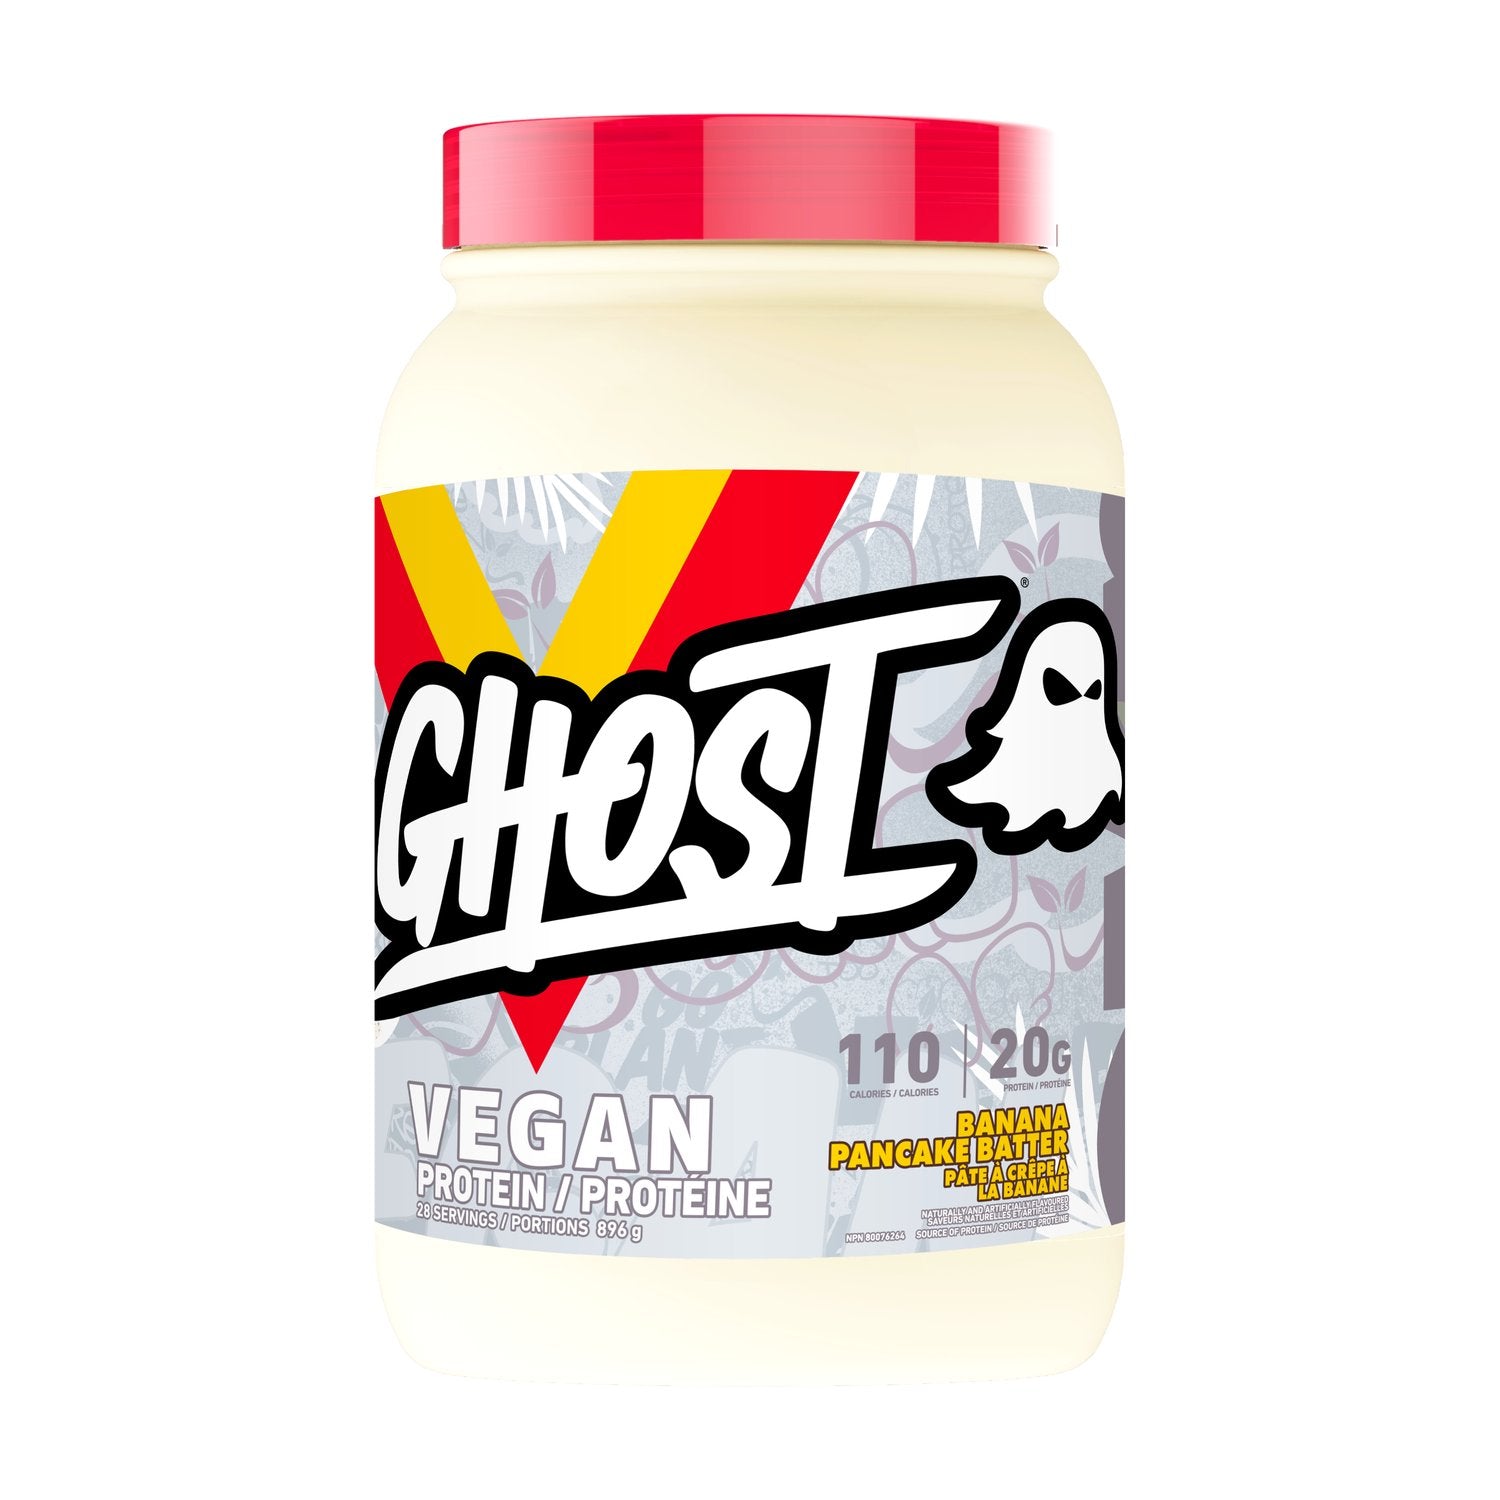 GHOST Vegan Protein 2LB - Hypa Christchurch - Ghost